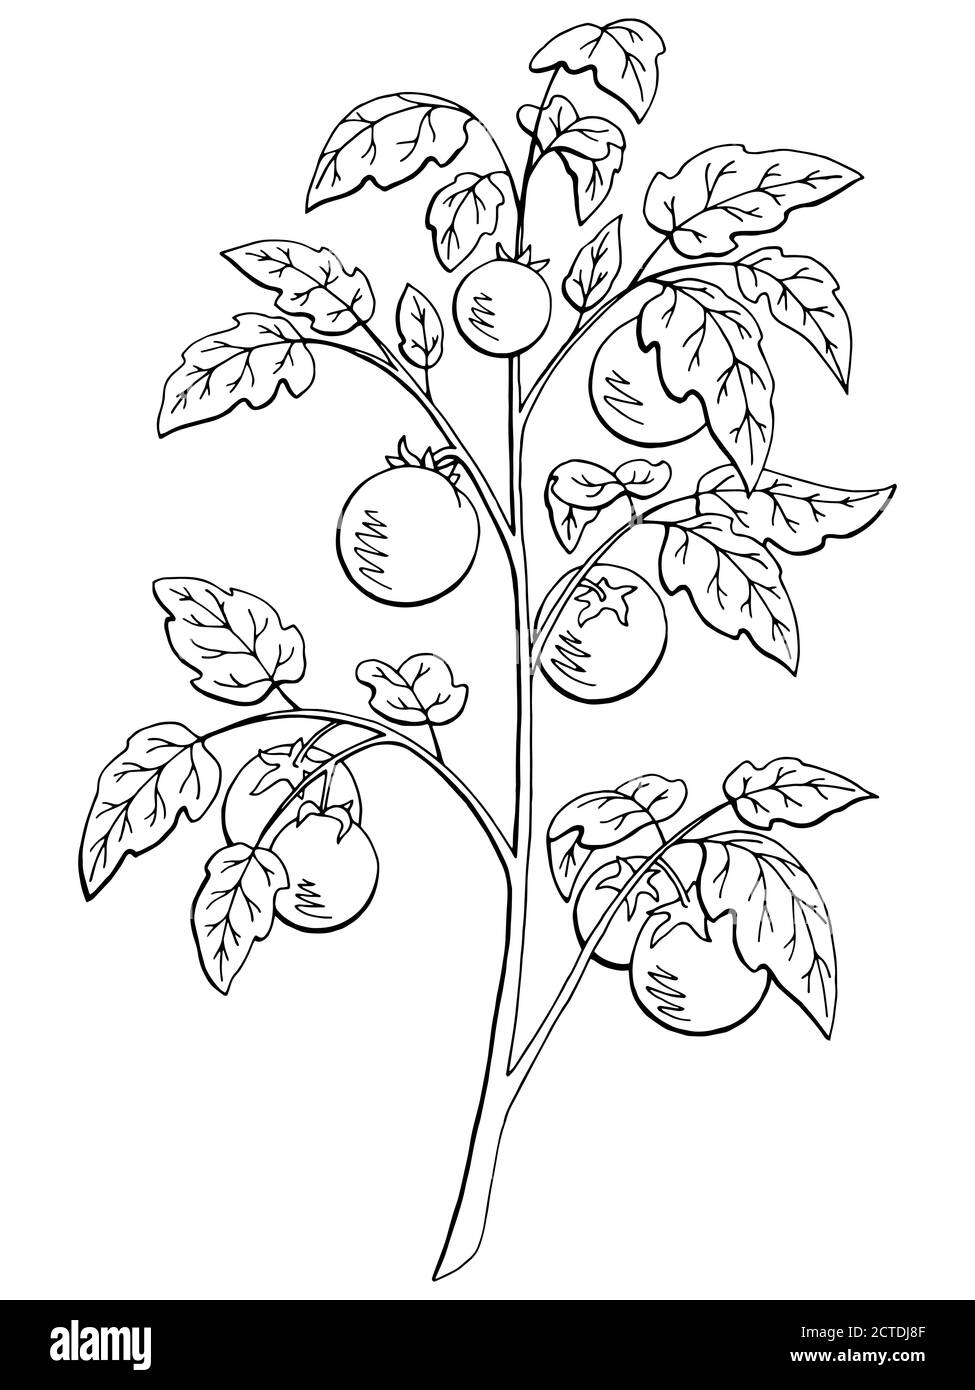 tomato leaf drawing